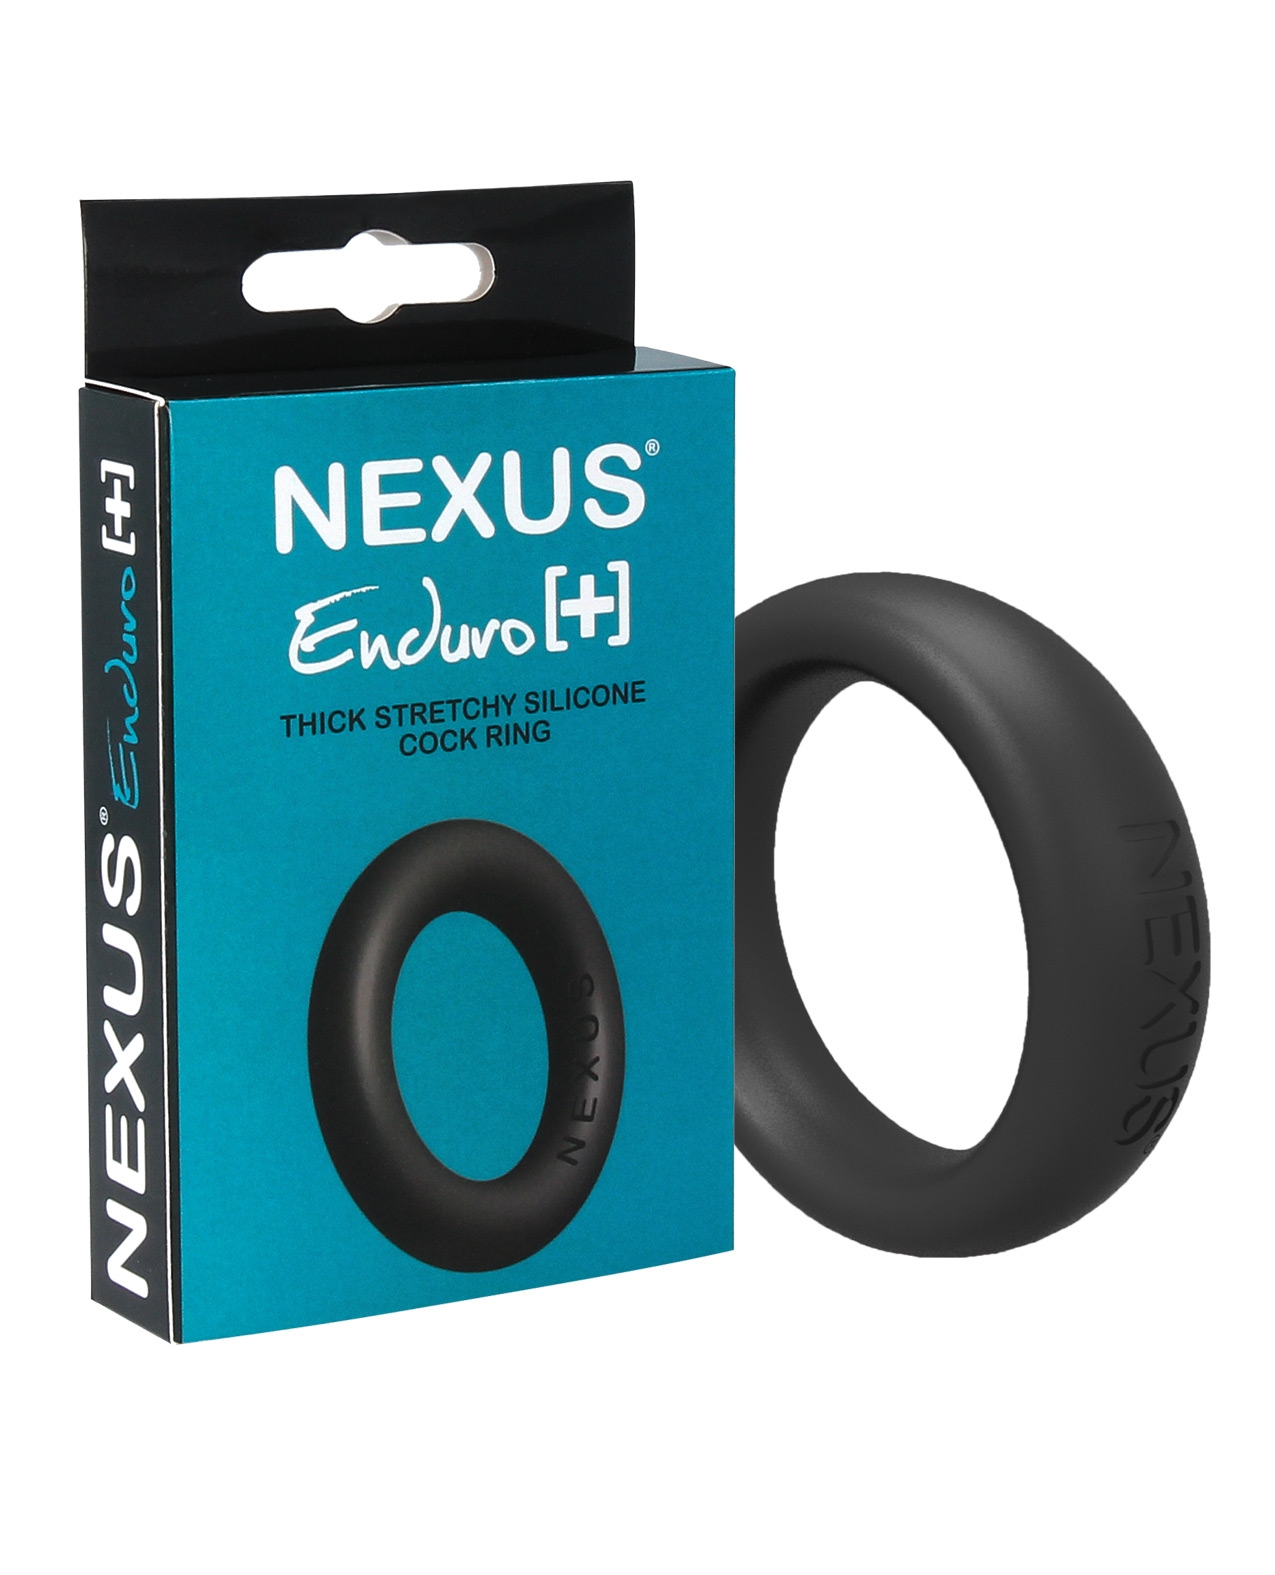 Nexus Enduro Plus Silicone Cock Ring - Black by Libertybelle